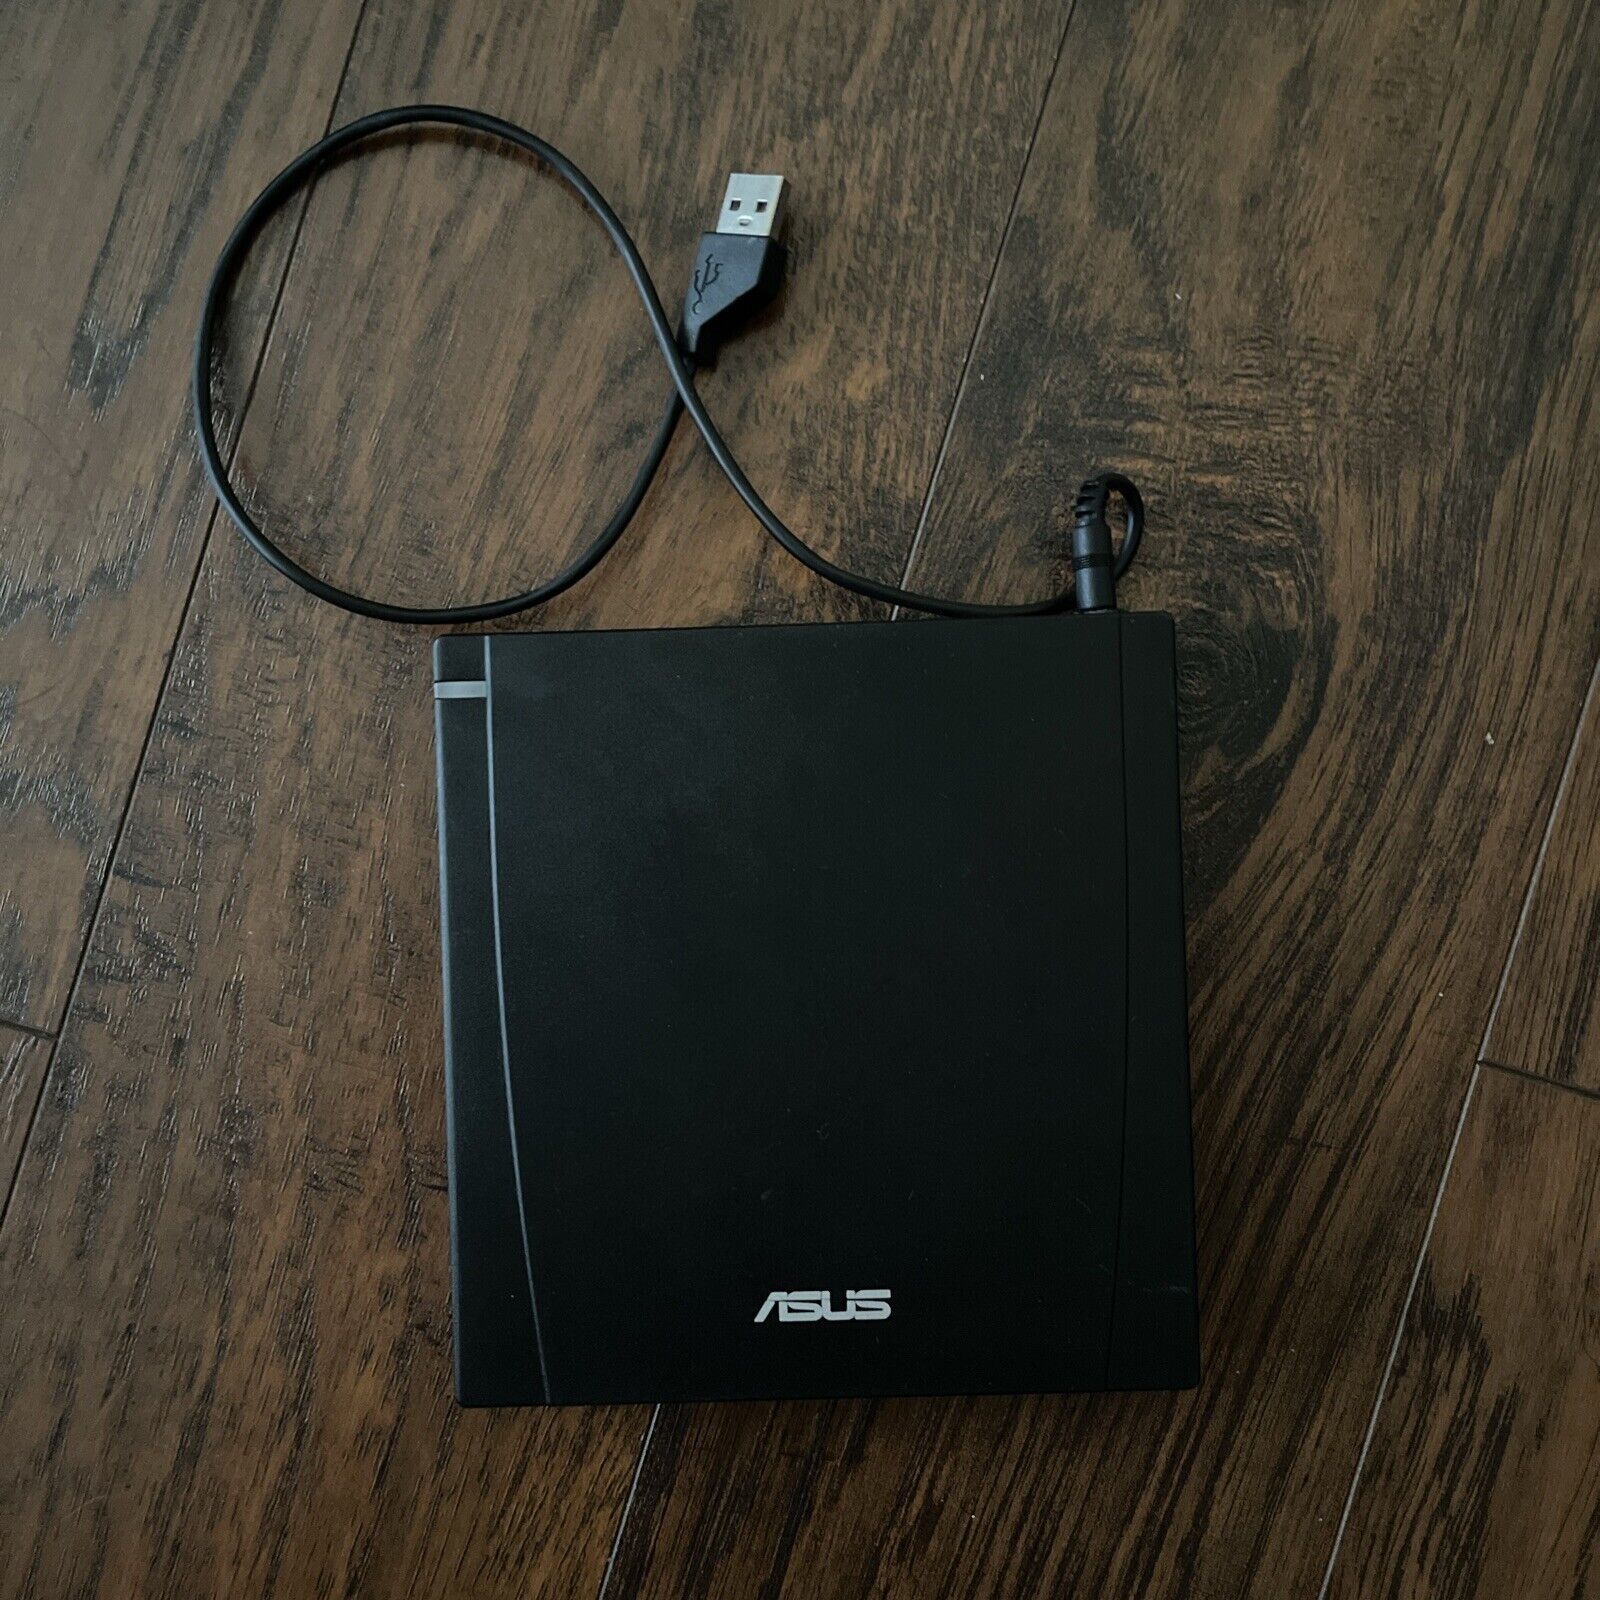 Asus External Slim DVD-RW Drive USB Burner 662-220307 Includes cable USB